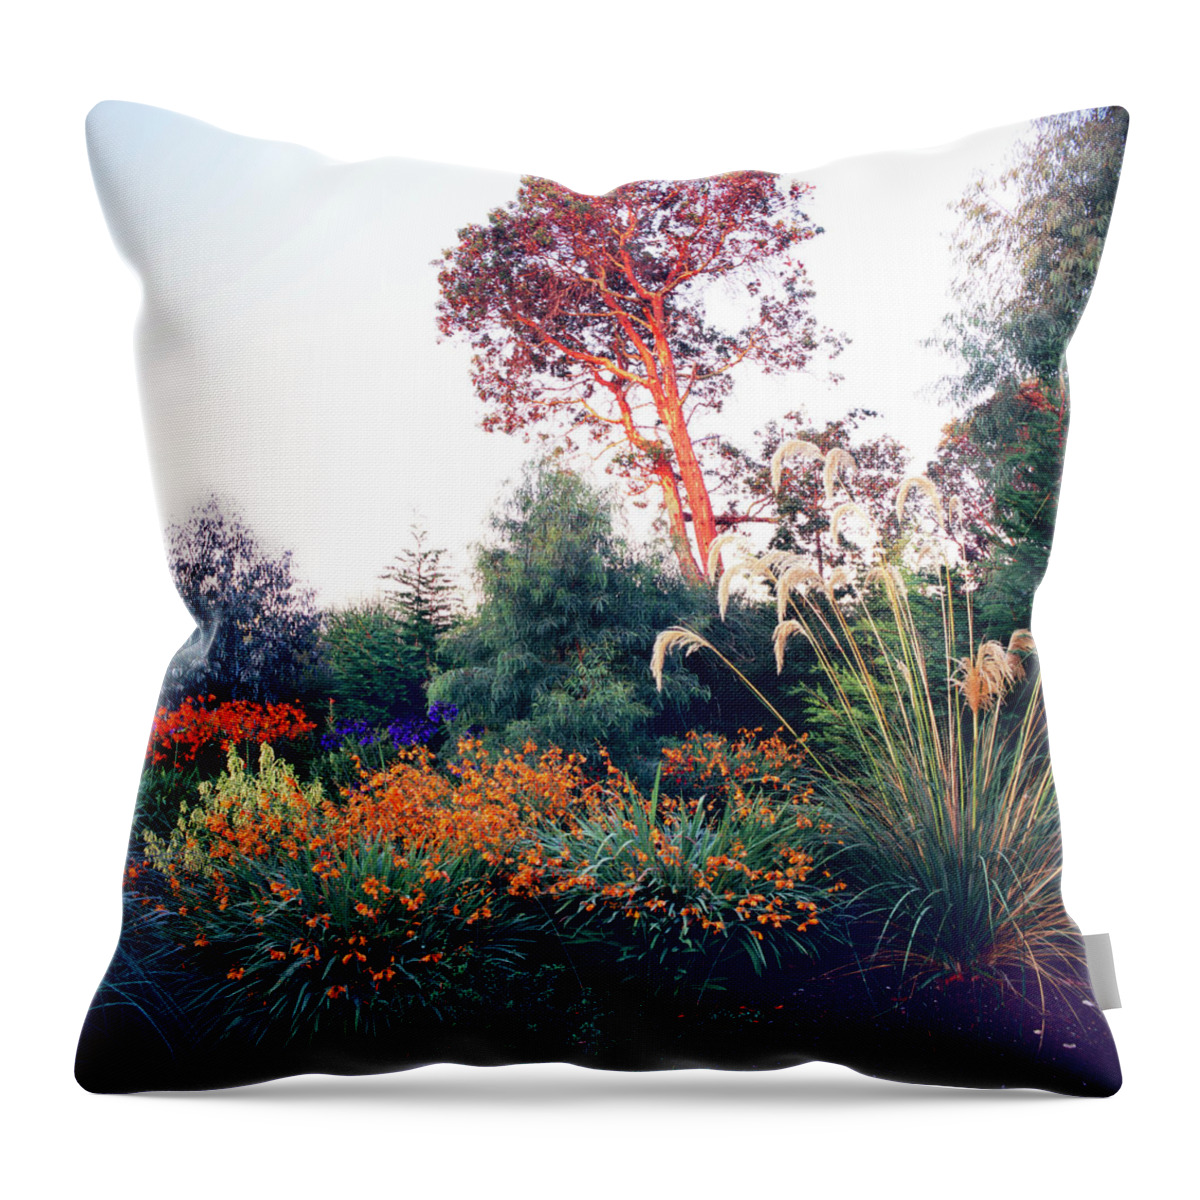 Scenics Throw Pillow featuring the photograph Dan Hinkley Garden #5 by Richard Felber